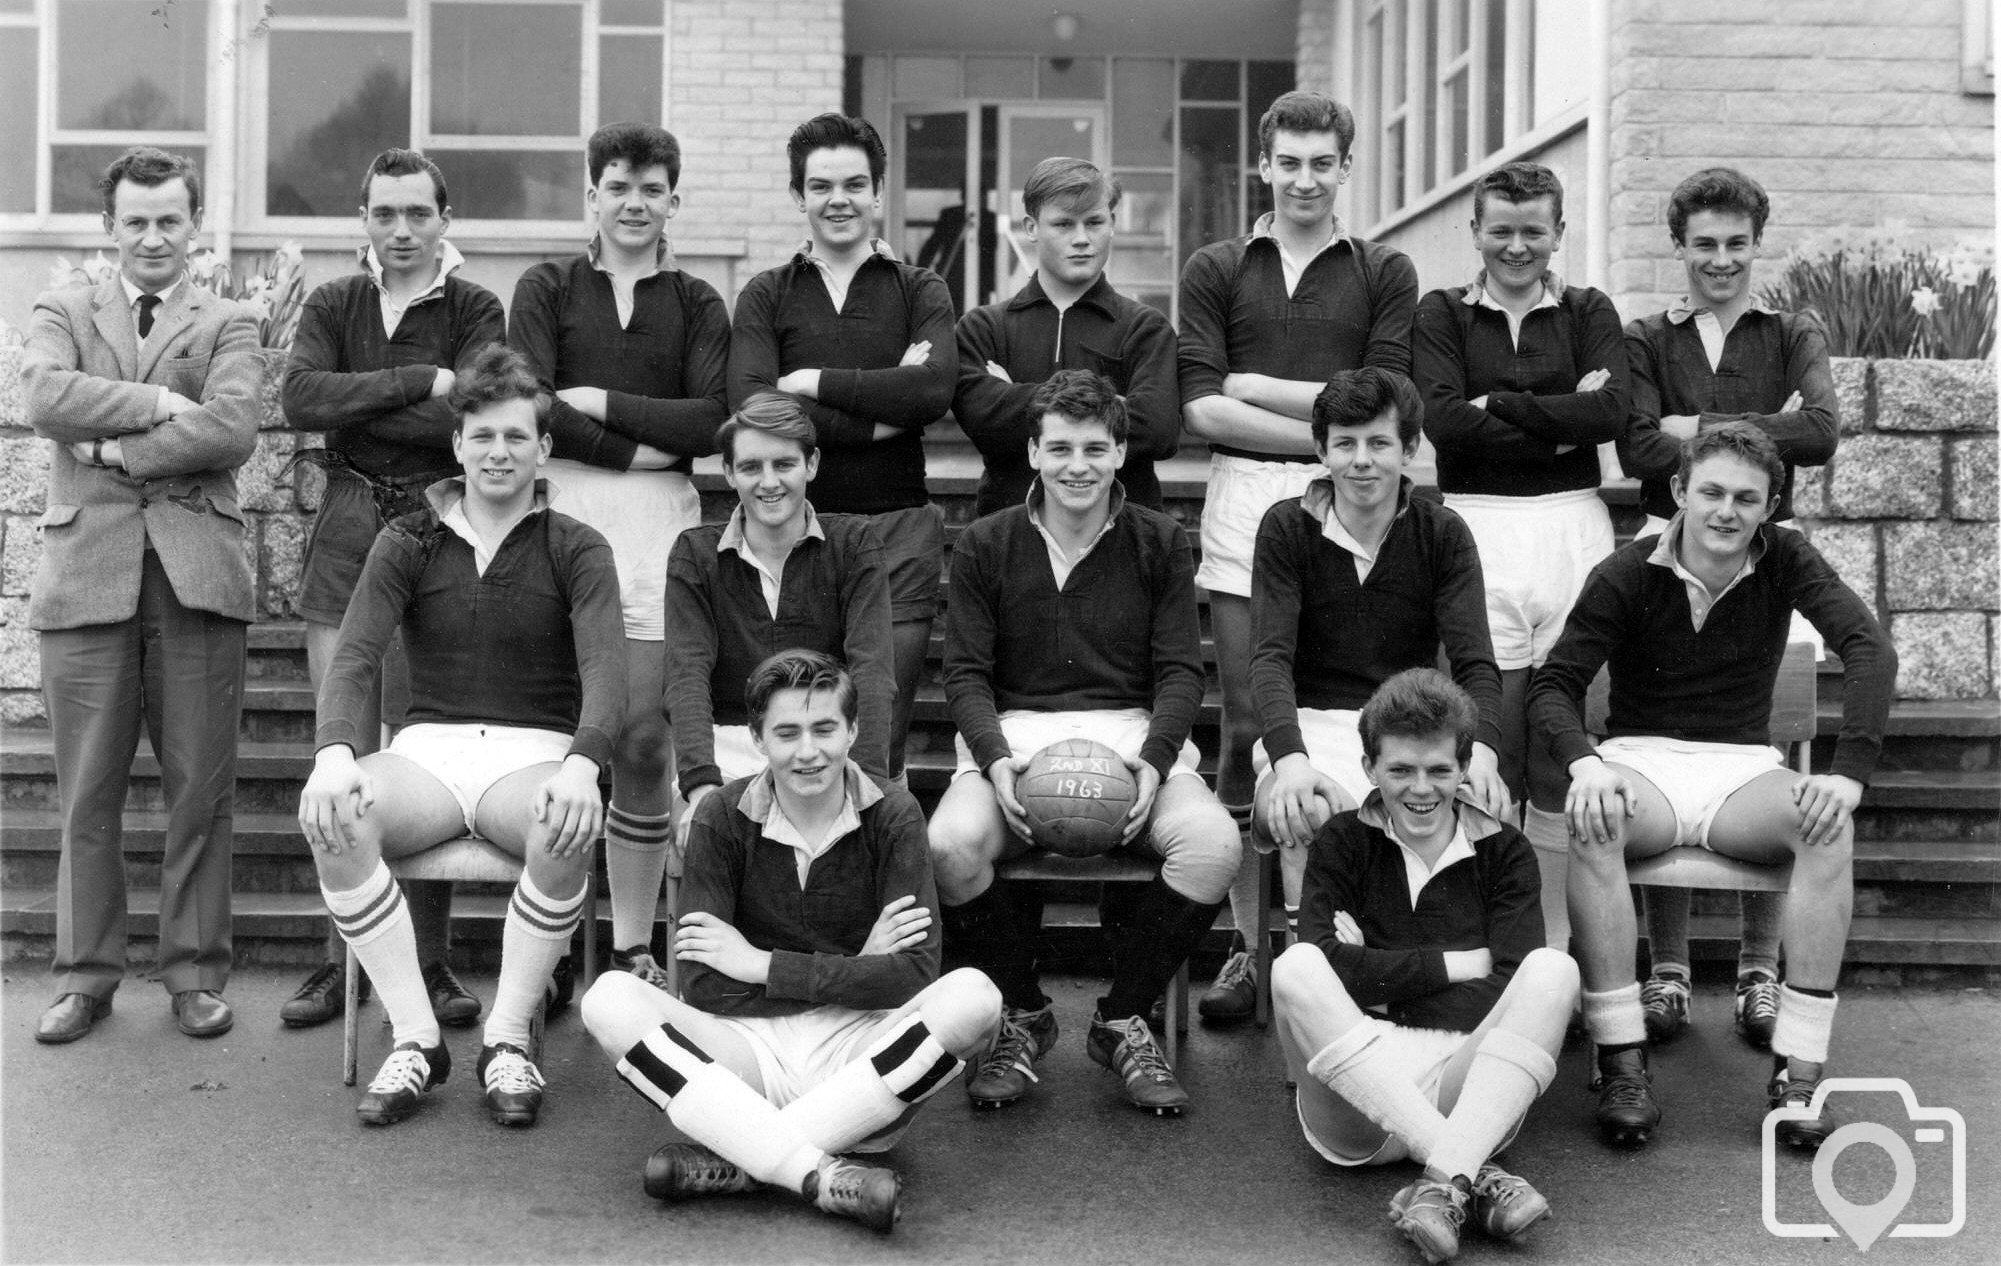 Football Second Team 1963